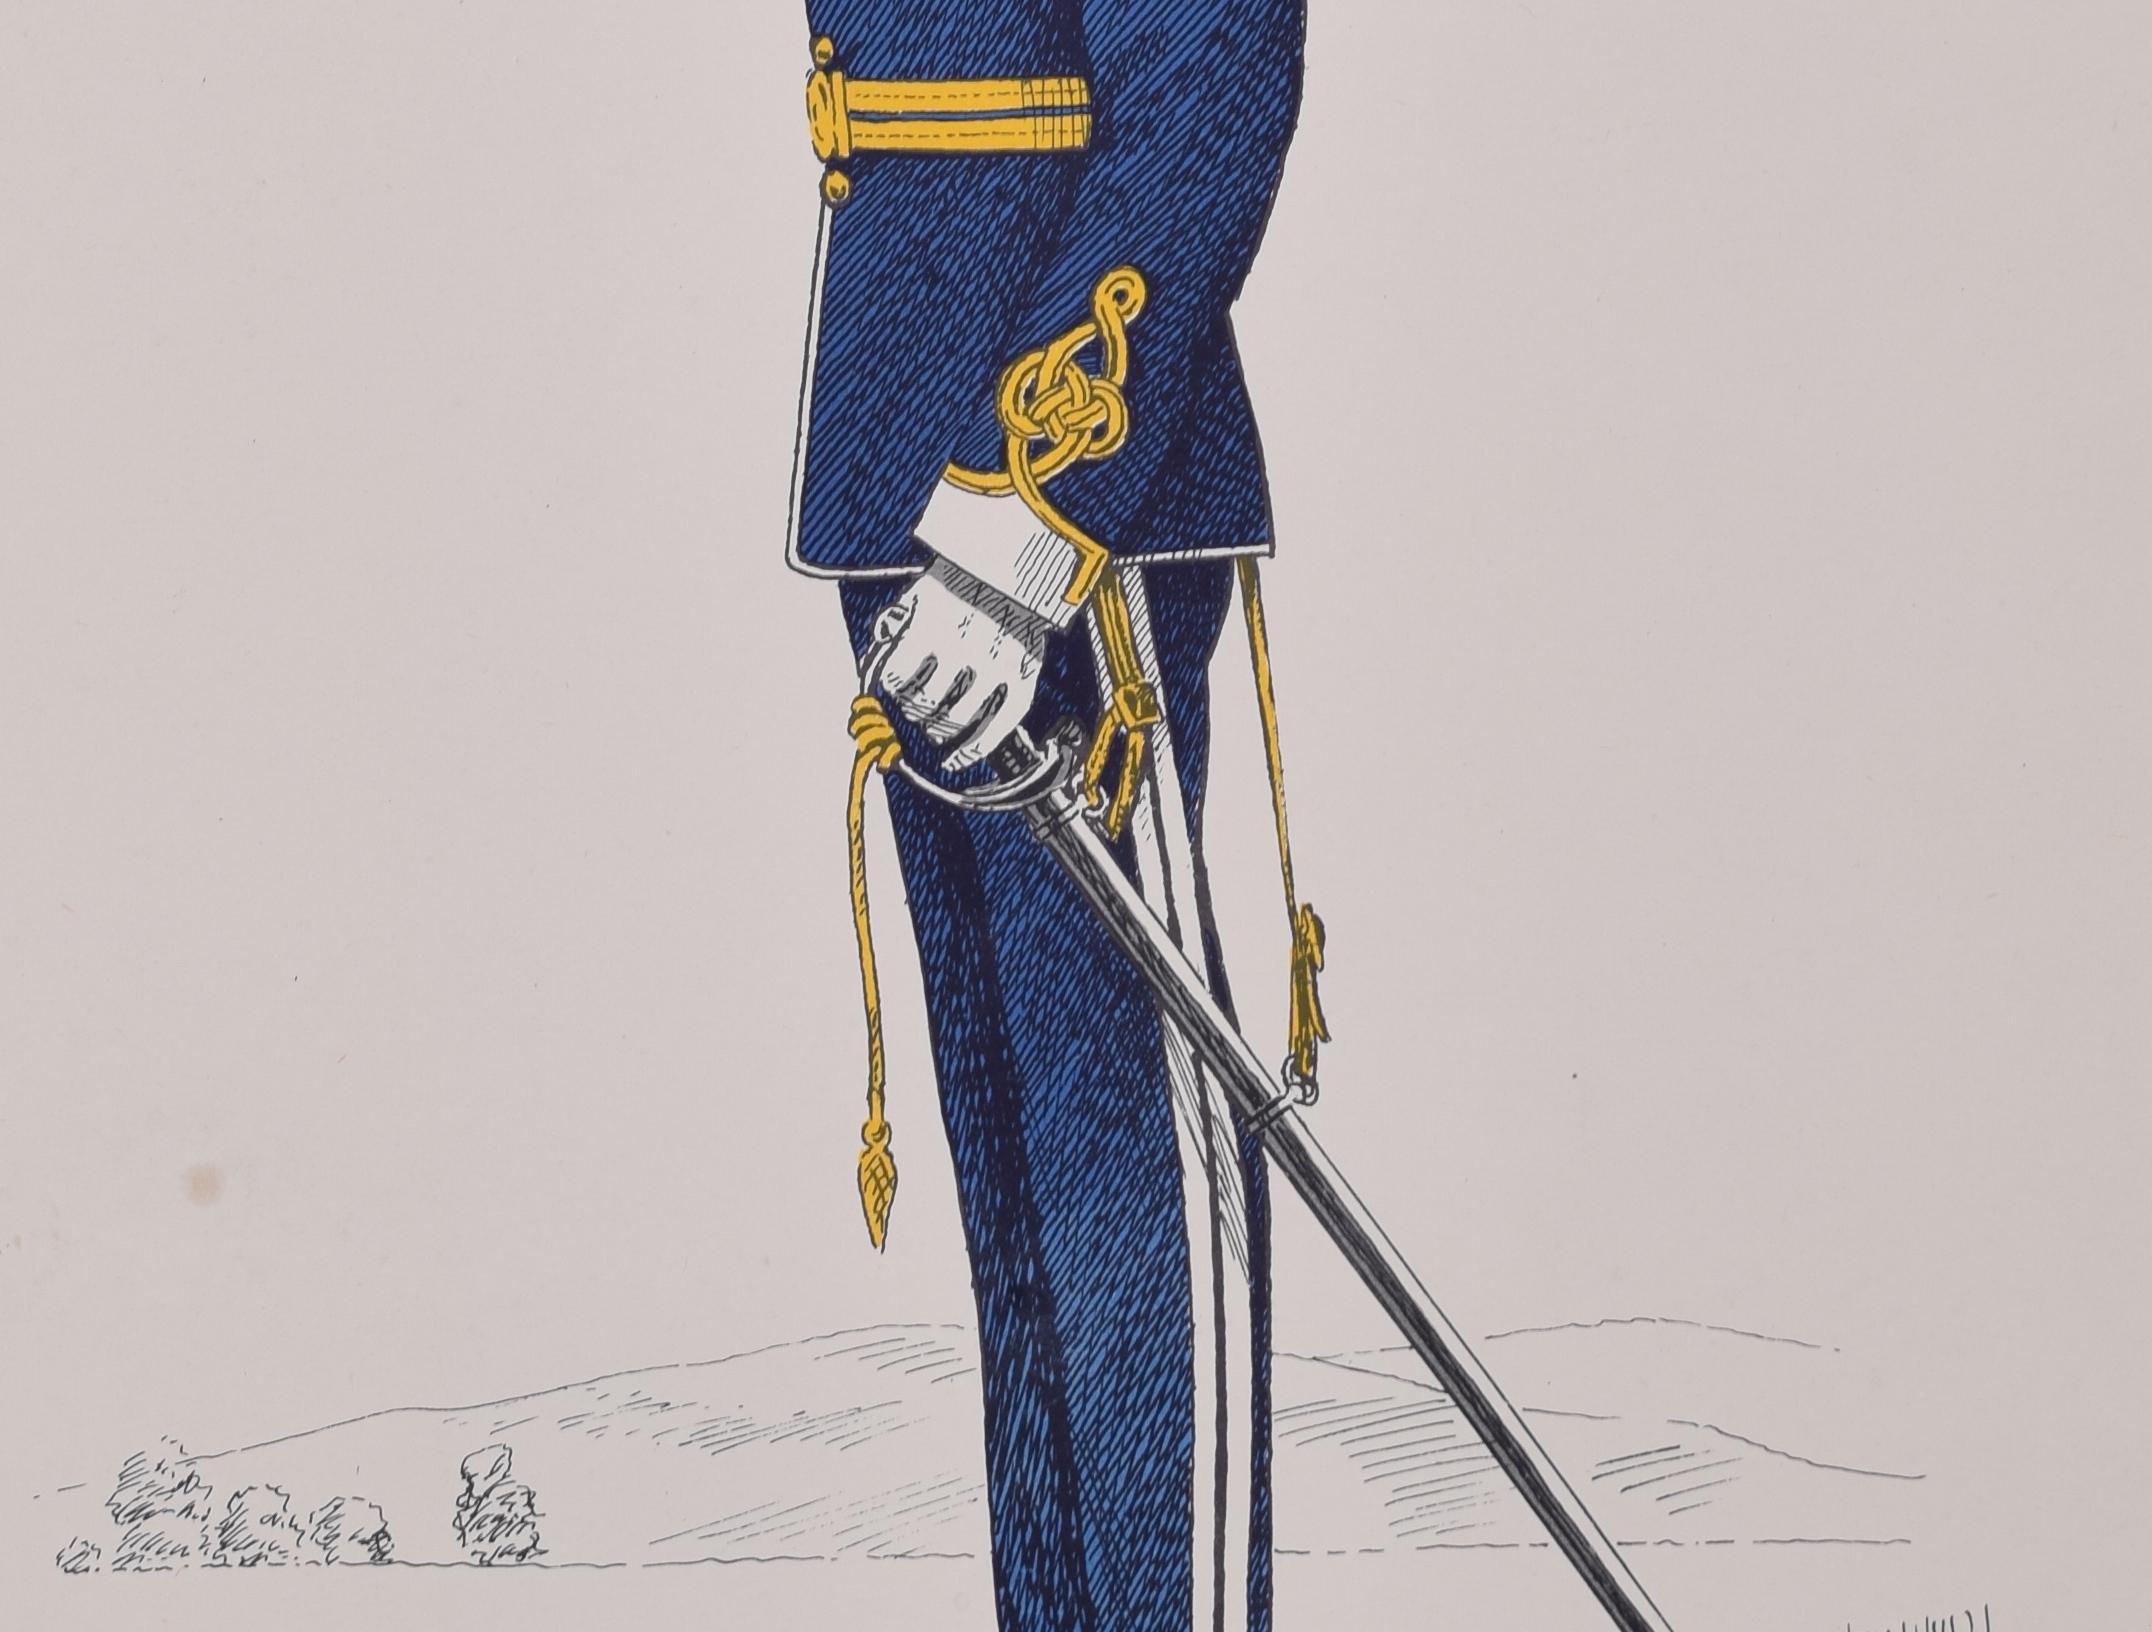 repton uniform 1929